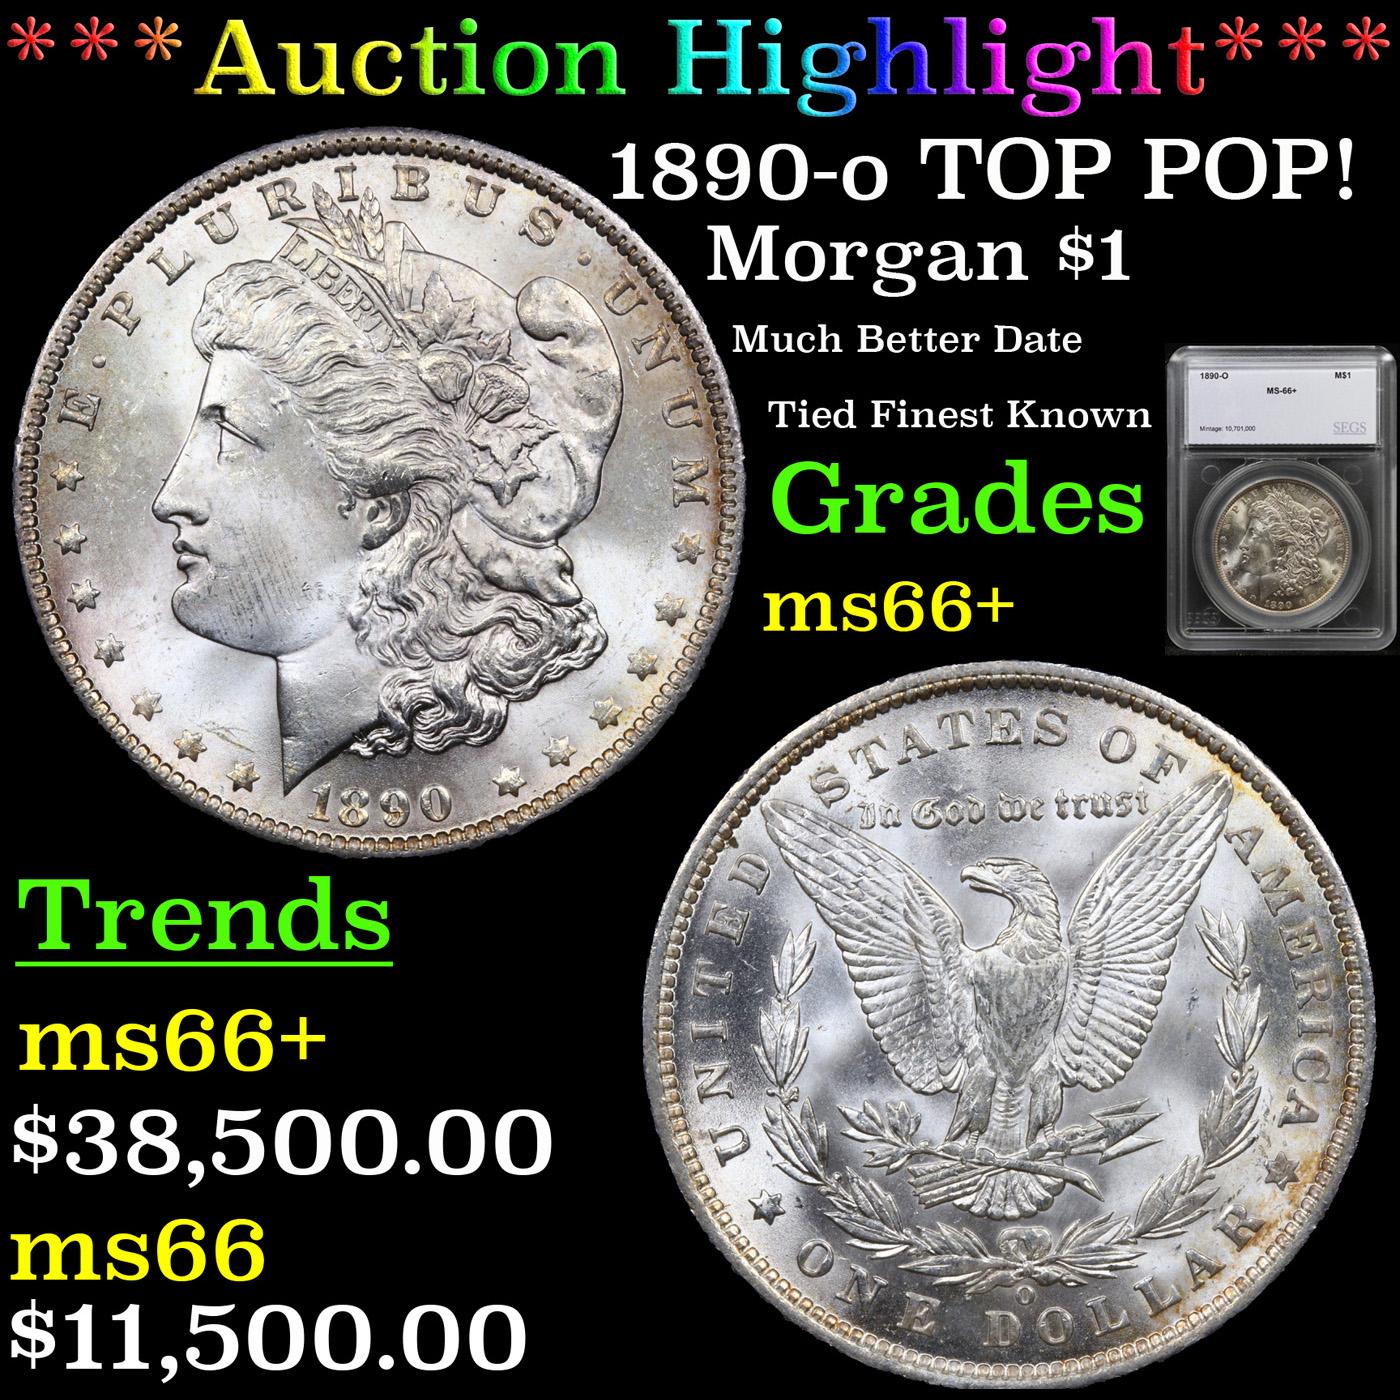 ***Auction Highlight*** 1890-o Morgan Dollar TOP POP! $1 Graded ms66+ By SEGS (fc)